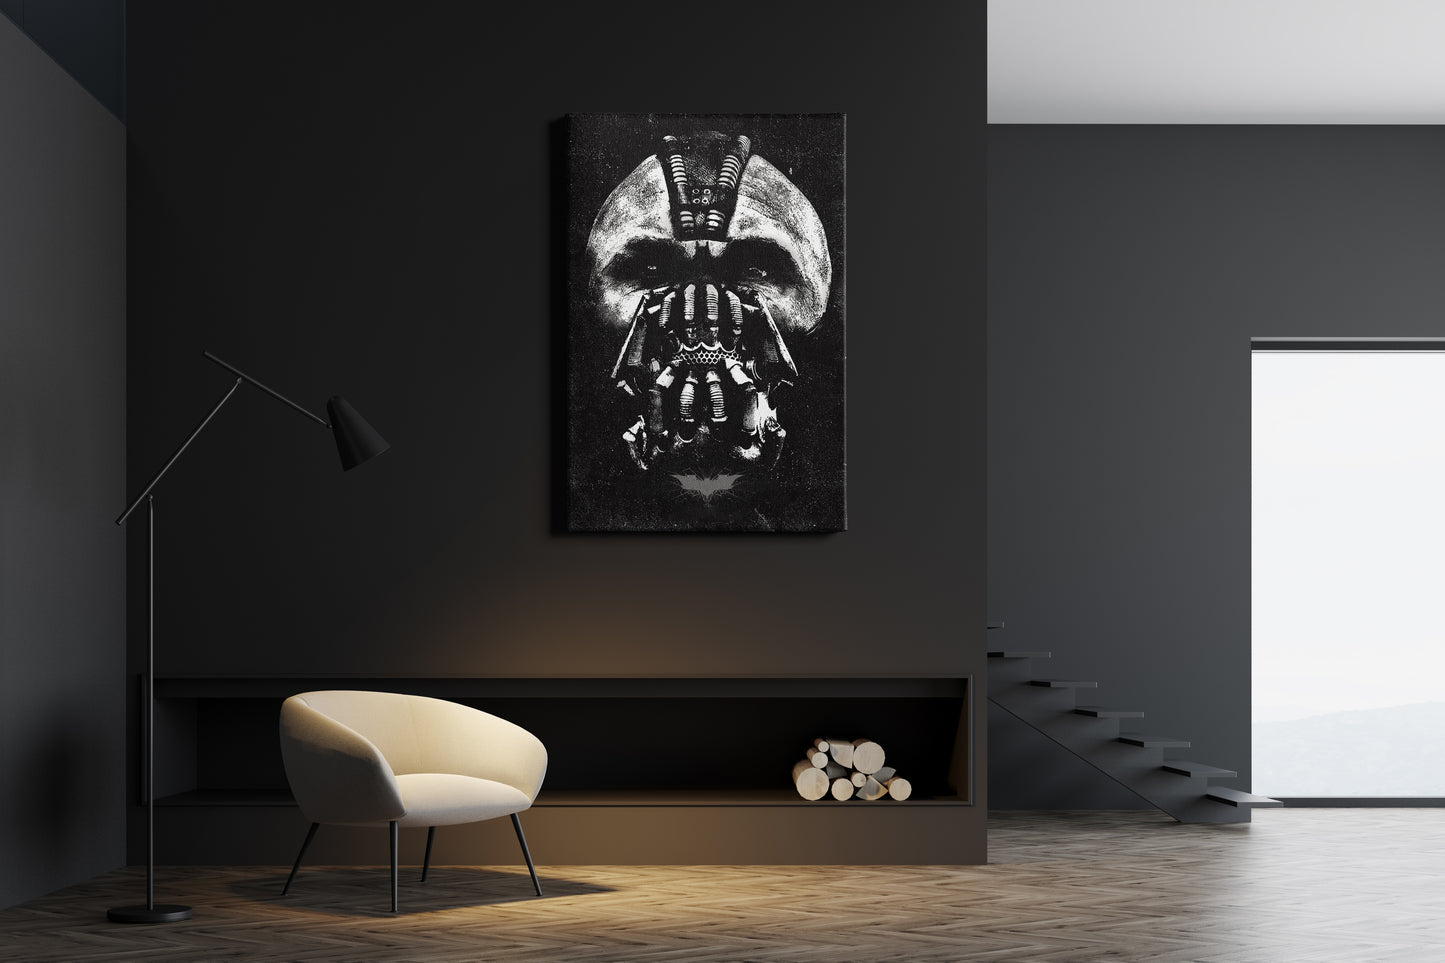 Bane The Dark Knight Rises Poster Batman Joker Movie Hand Made Posters Canvas Framed Print Wall Art Home Kids Decor